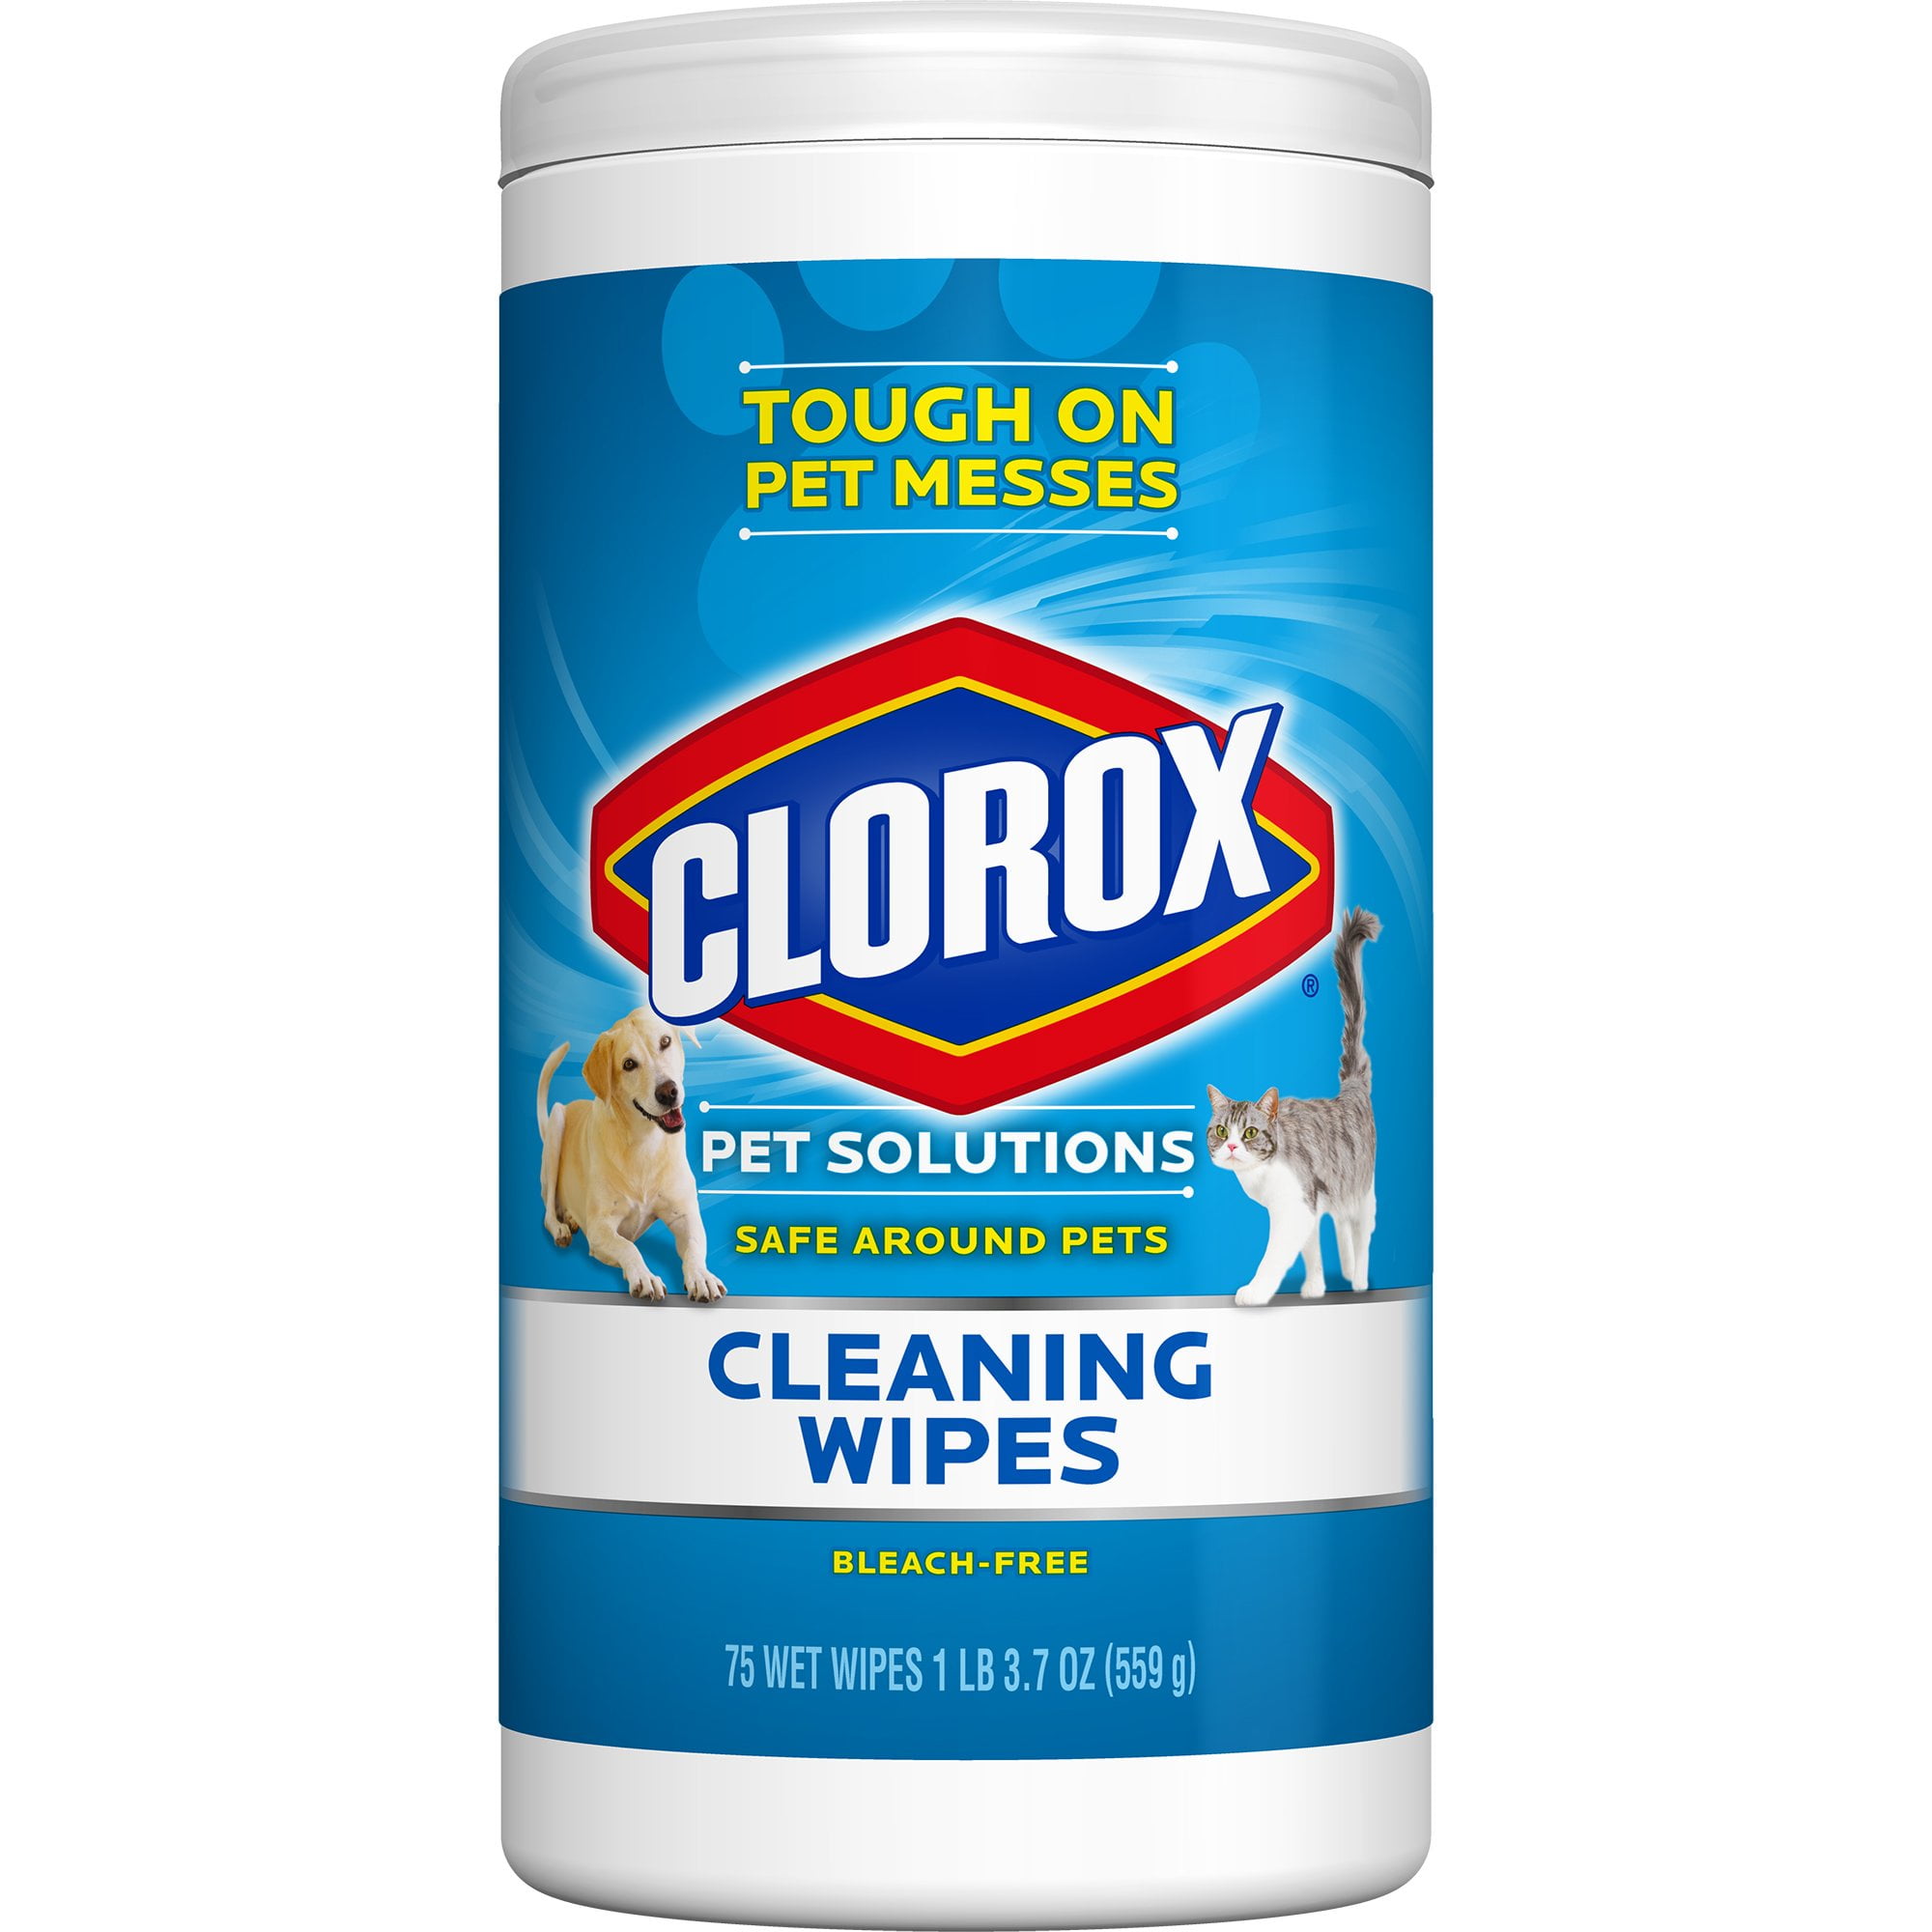 Solutions pet. Clorox Pet solutions. Clorox Pet products co наполнитель. Cleaning wipes. Pet wetting.